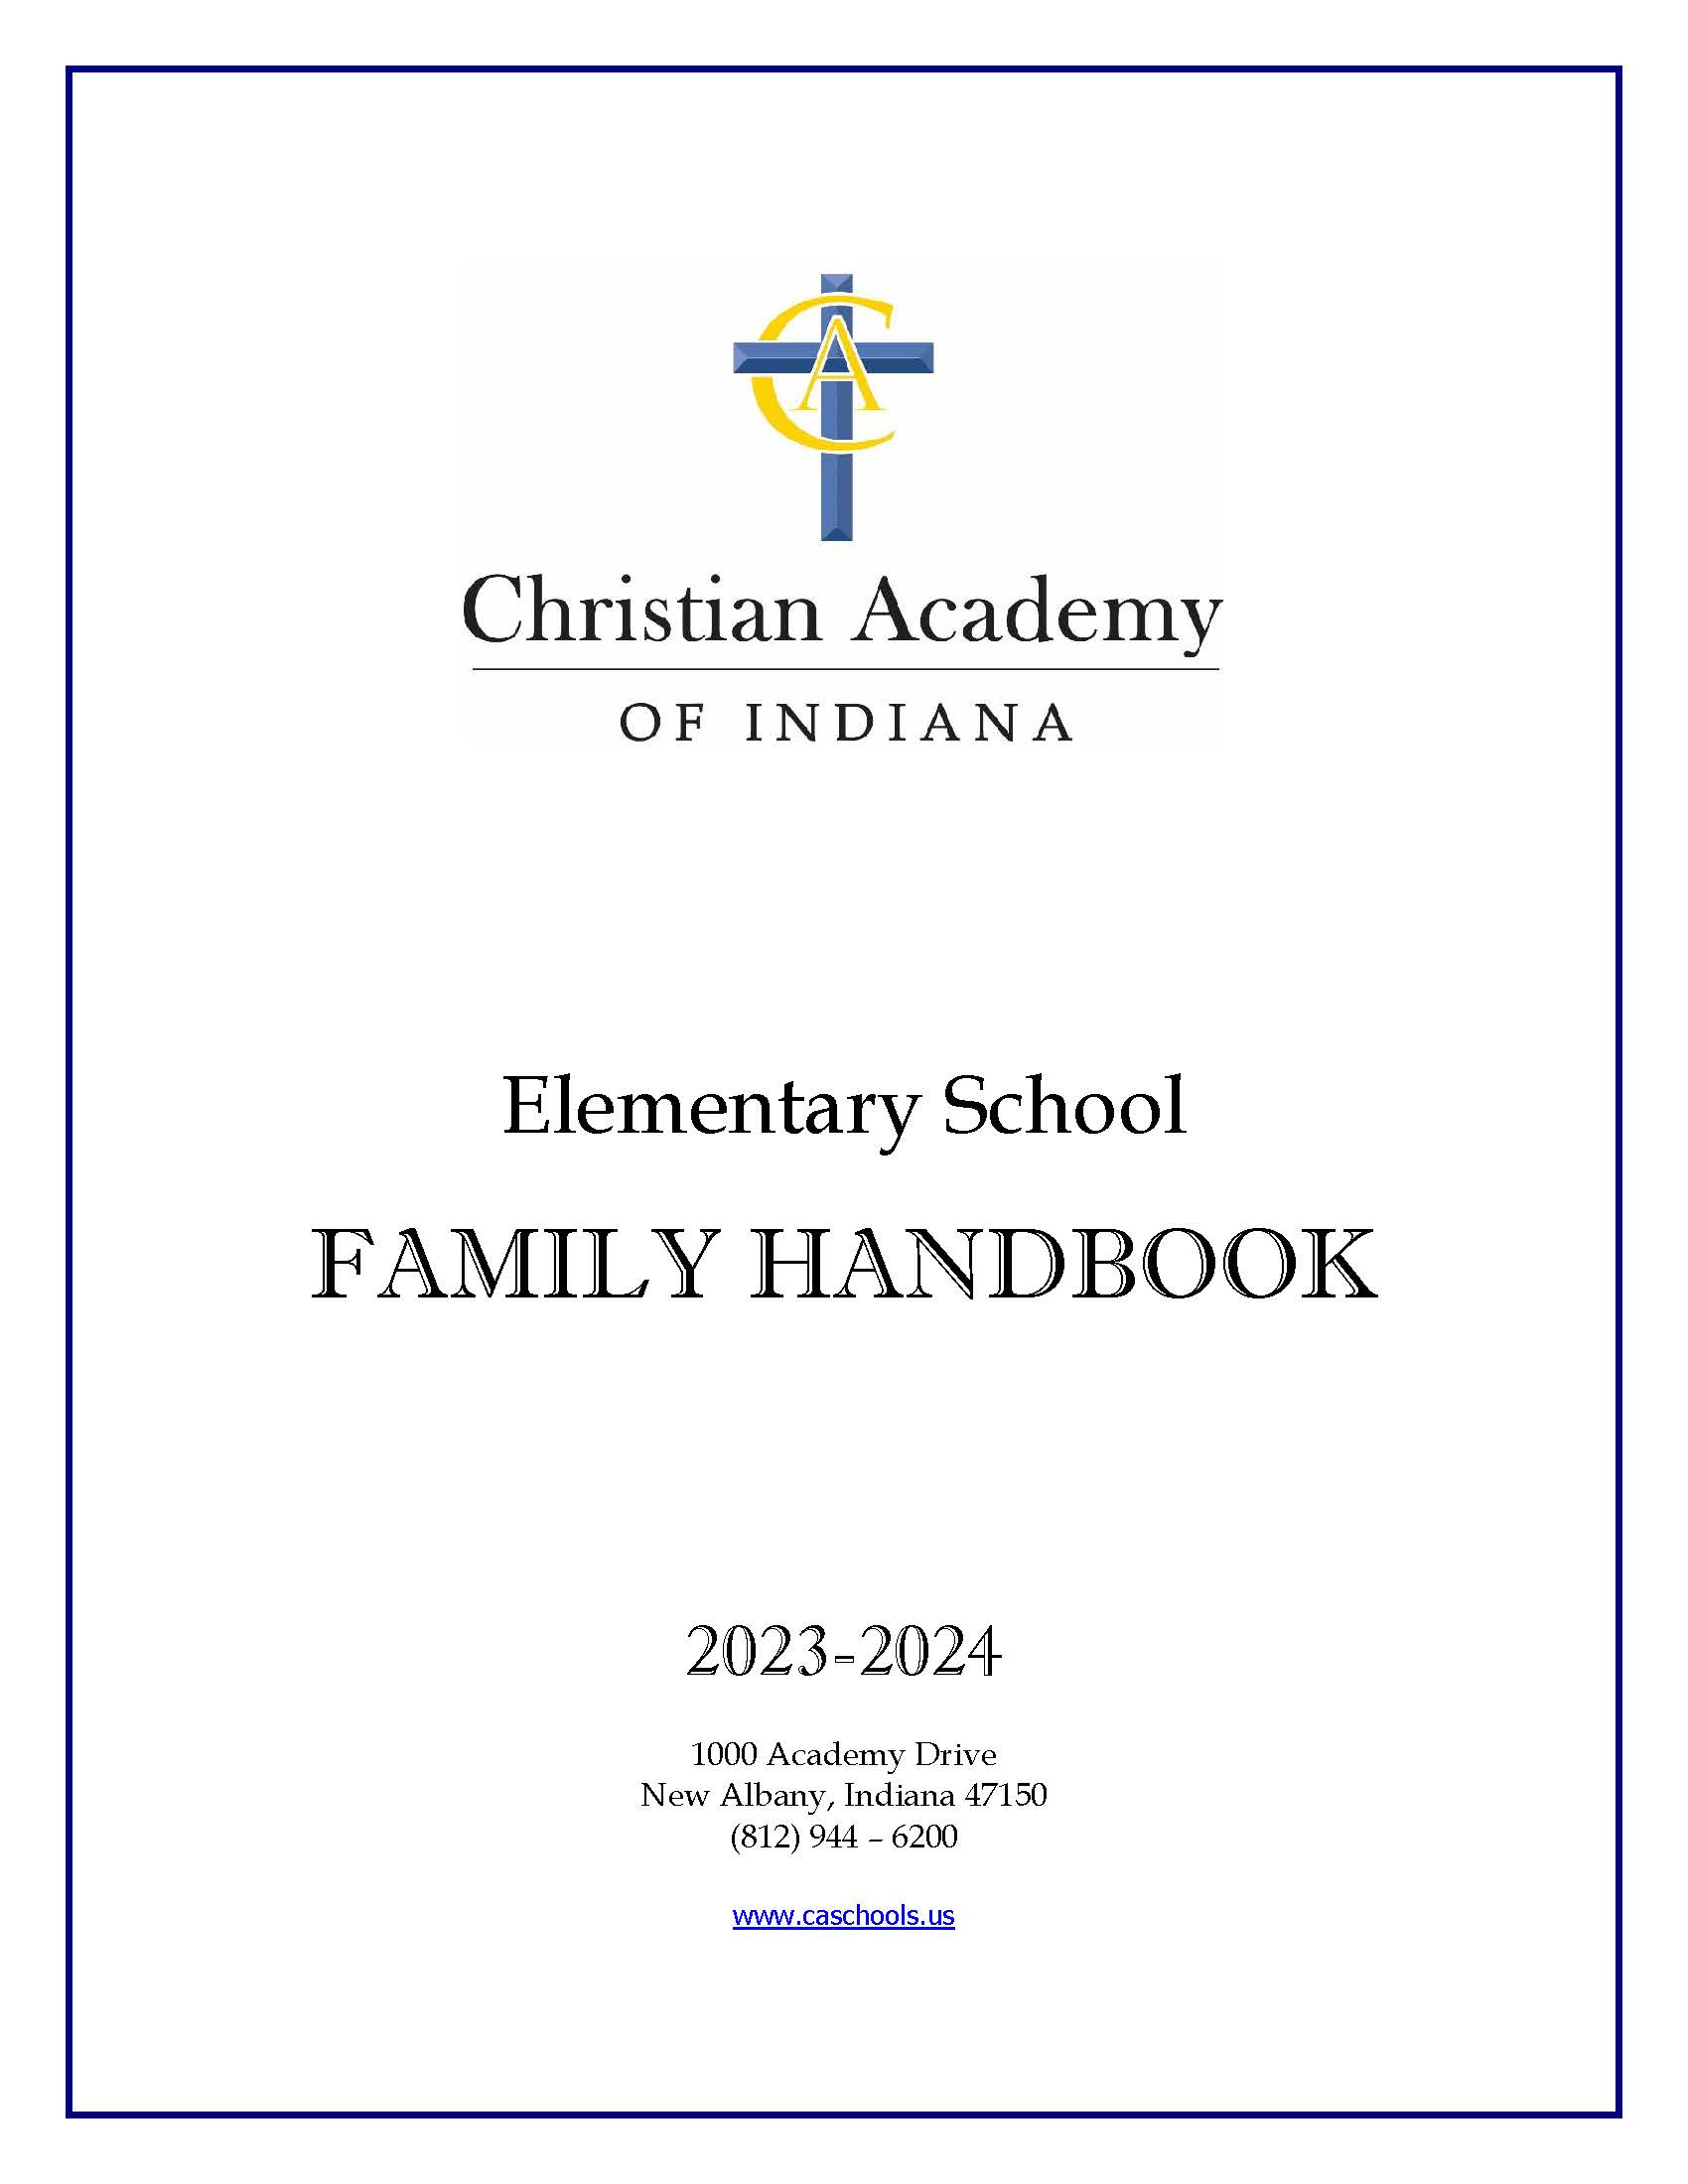 Christian Academy School System | Christian Academy of Indiana Elementary | 2023-2024 Family Handbook